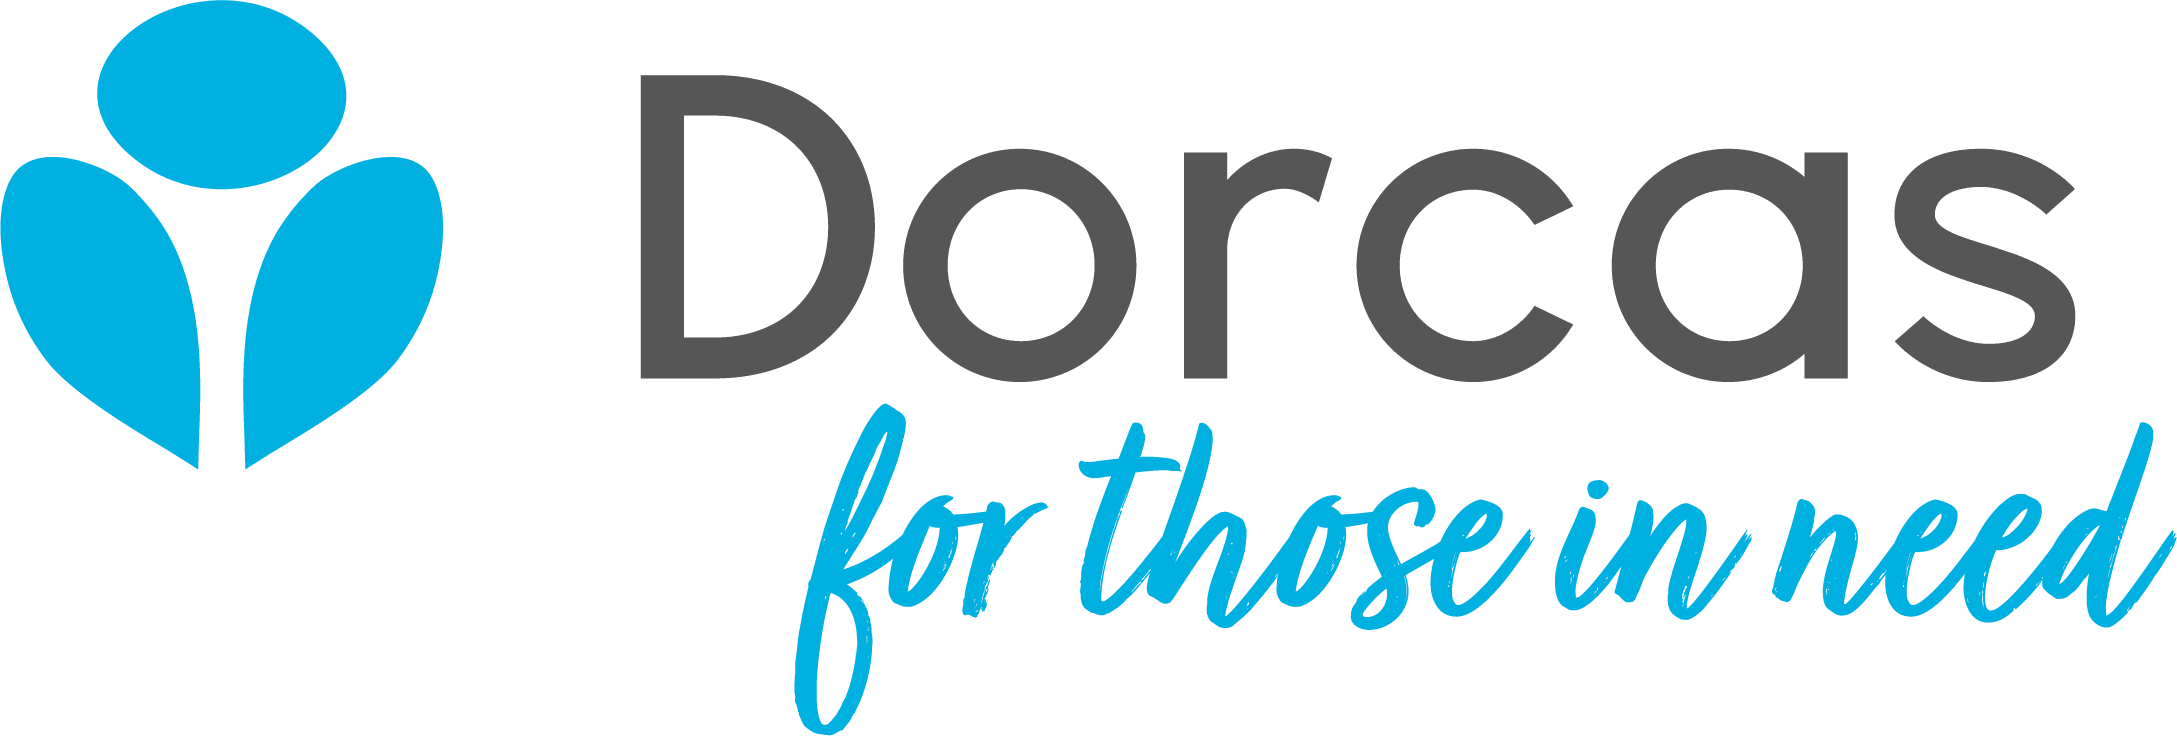 dorcas-logo-tagline-web